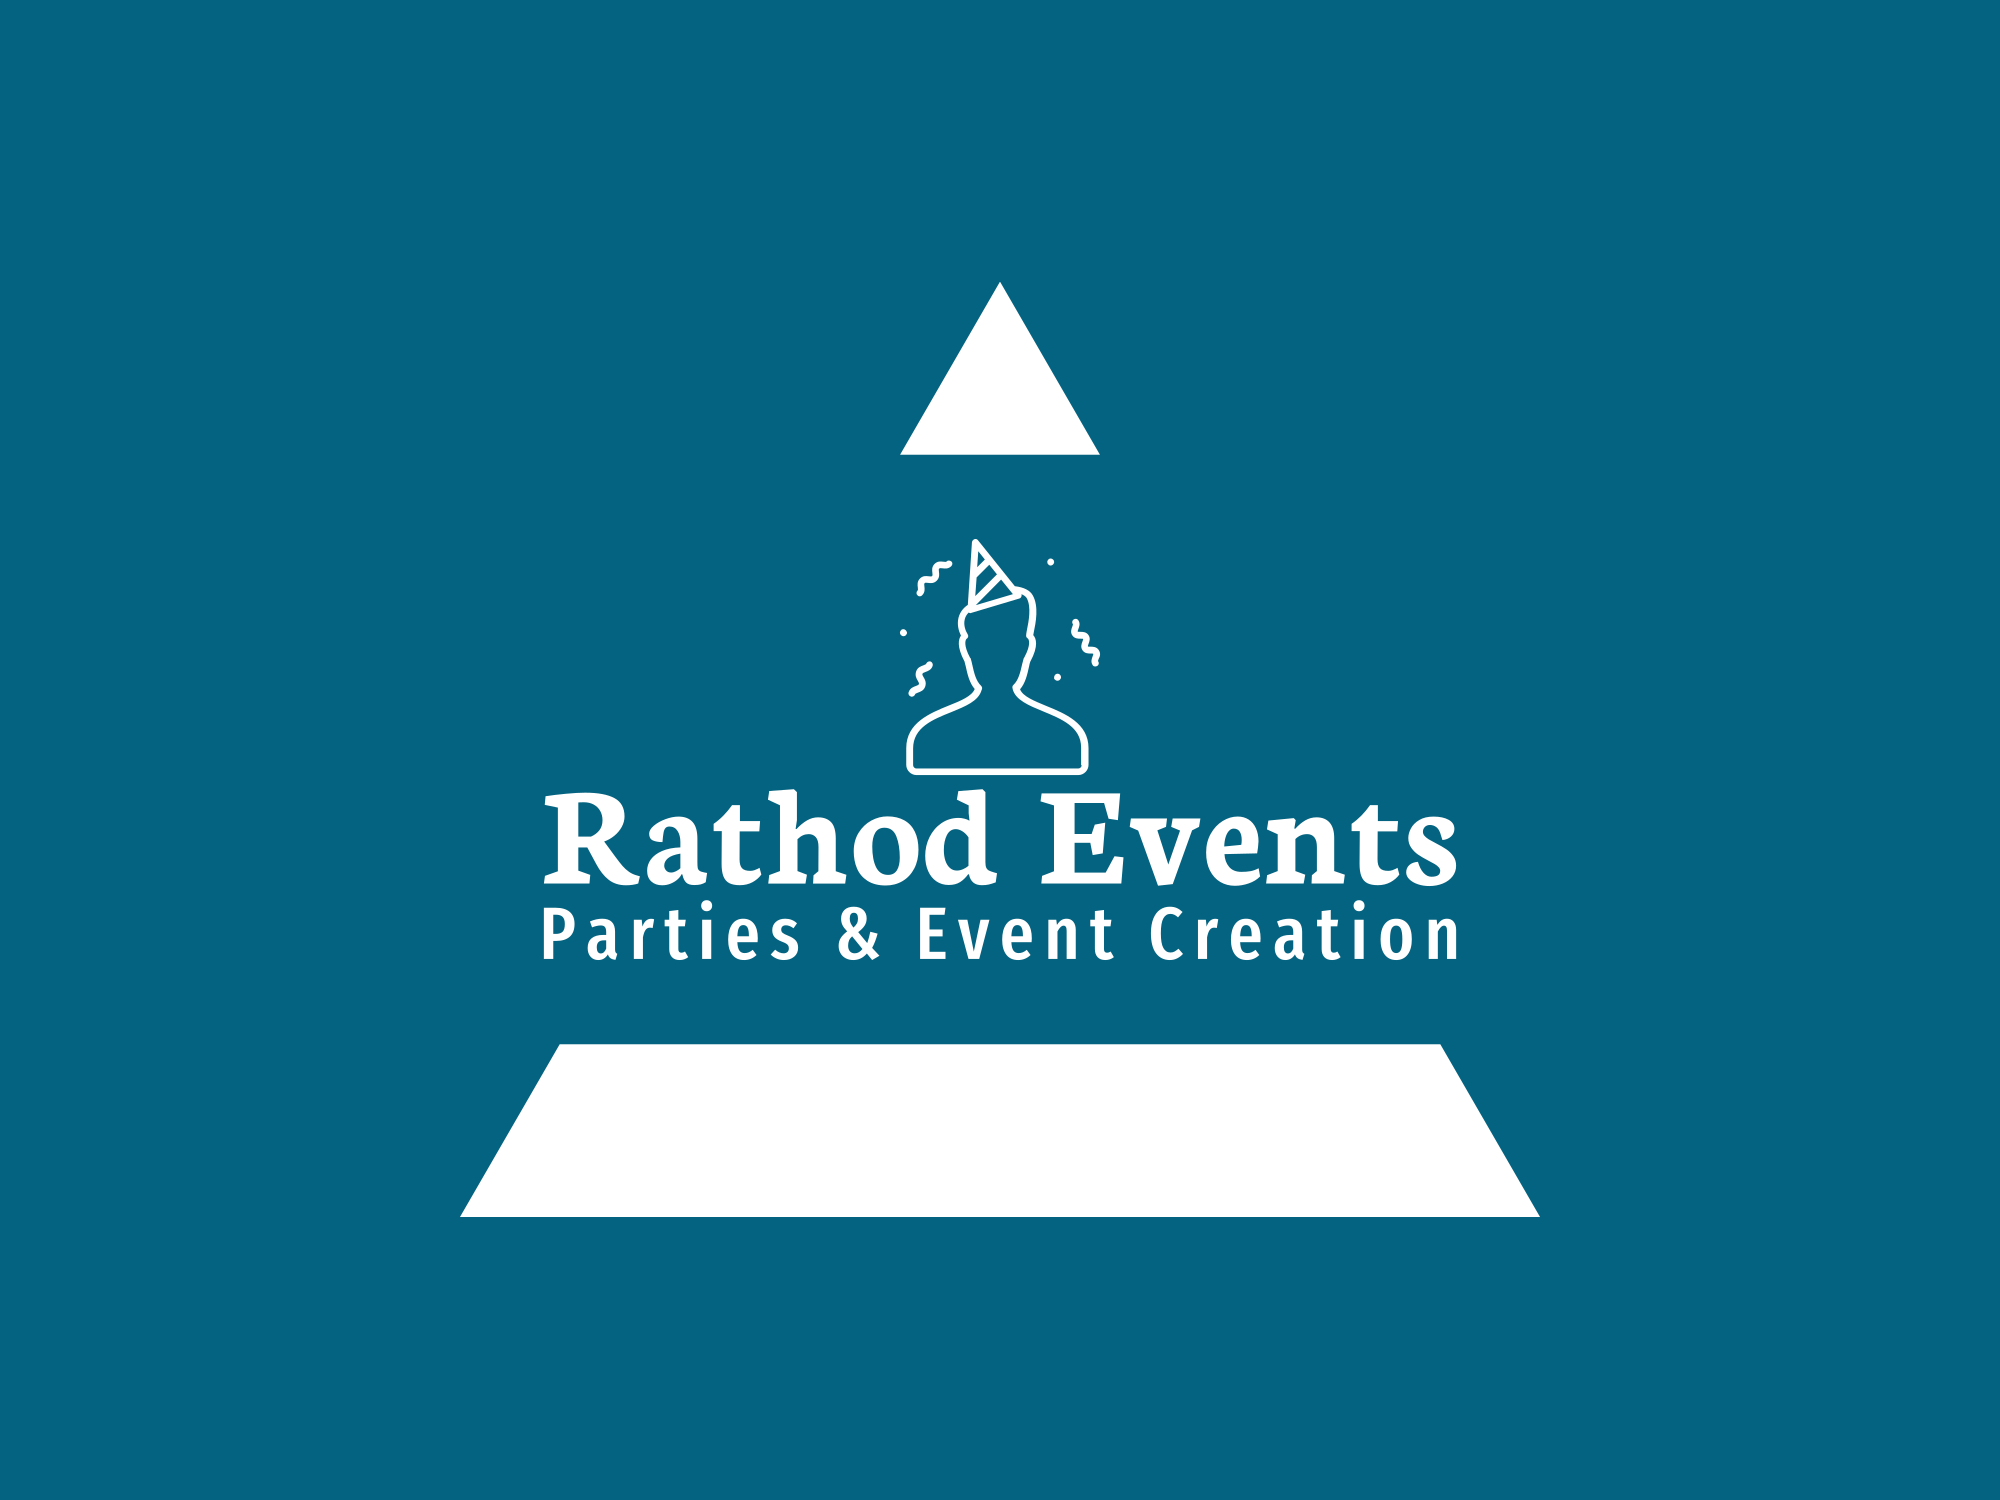 Ash Rathod | Brand Story Strategist